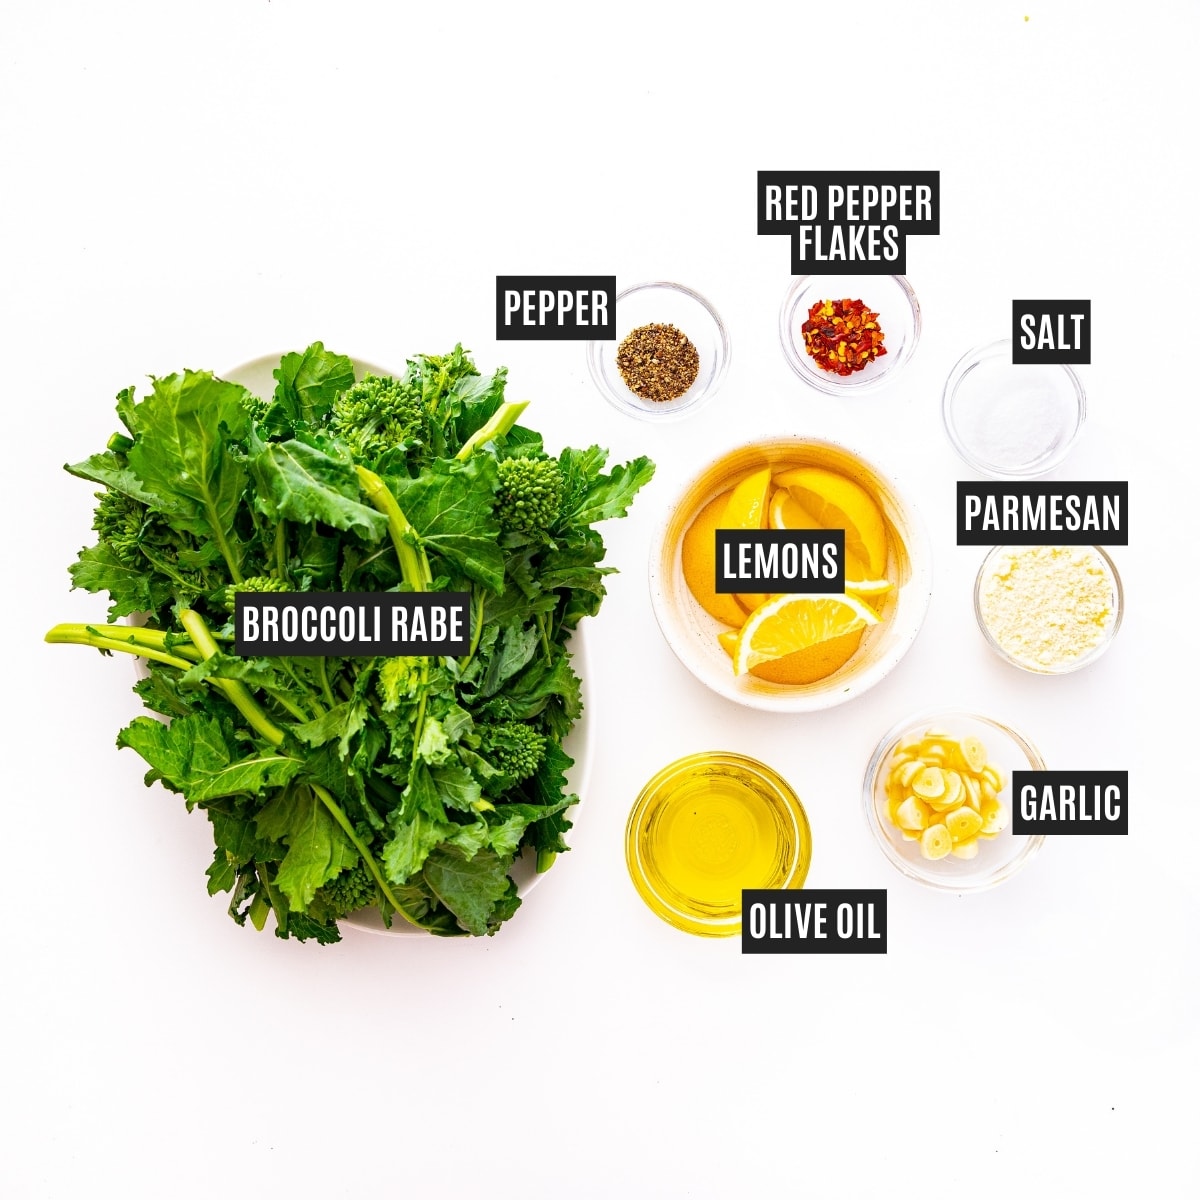 Broccoli rabe recipe ingredients.